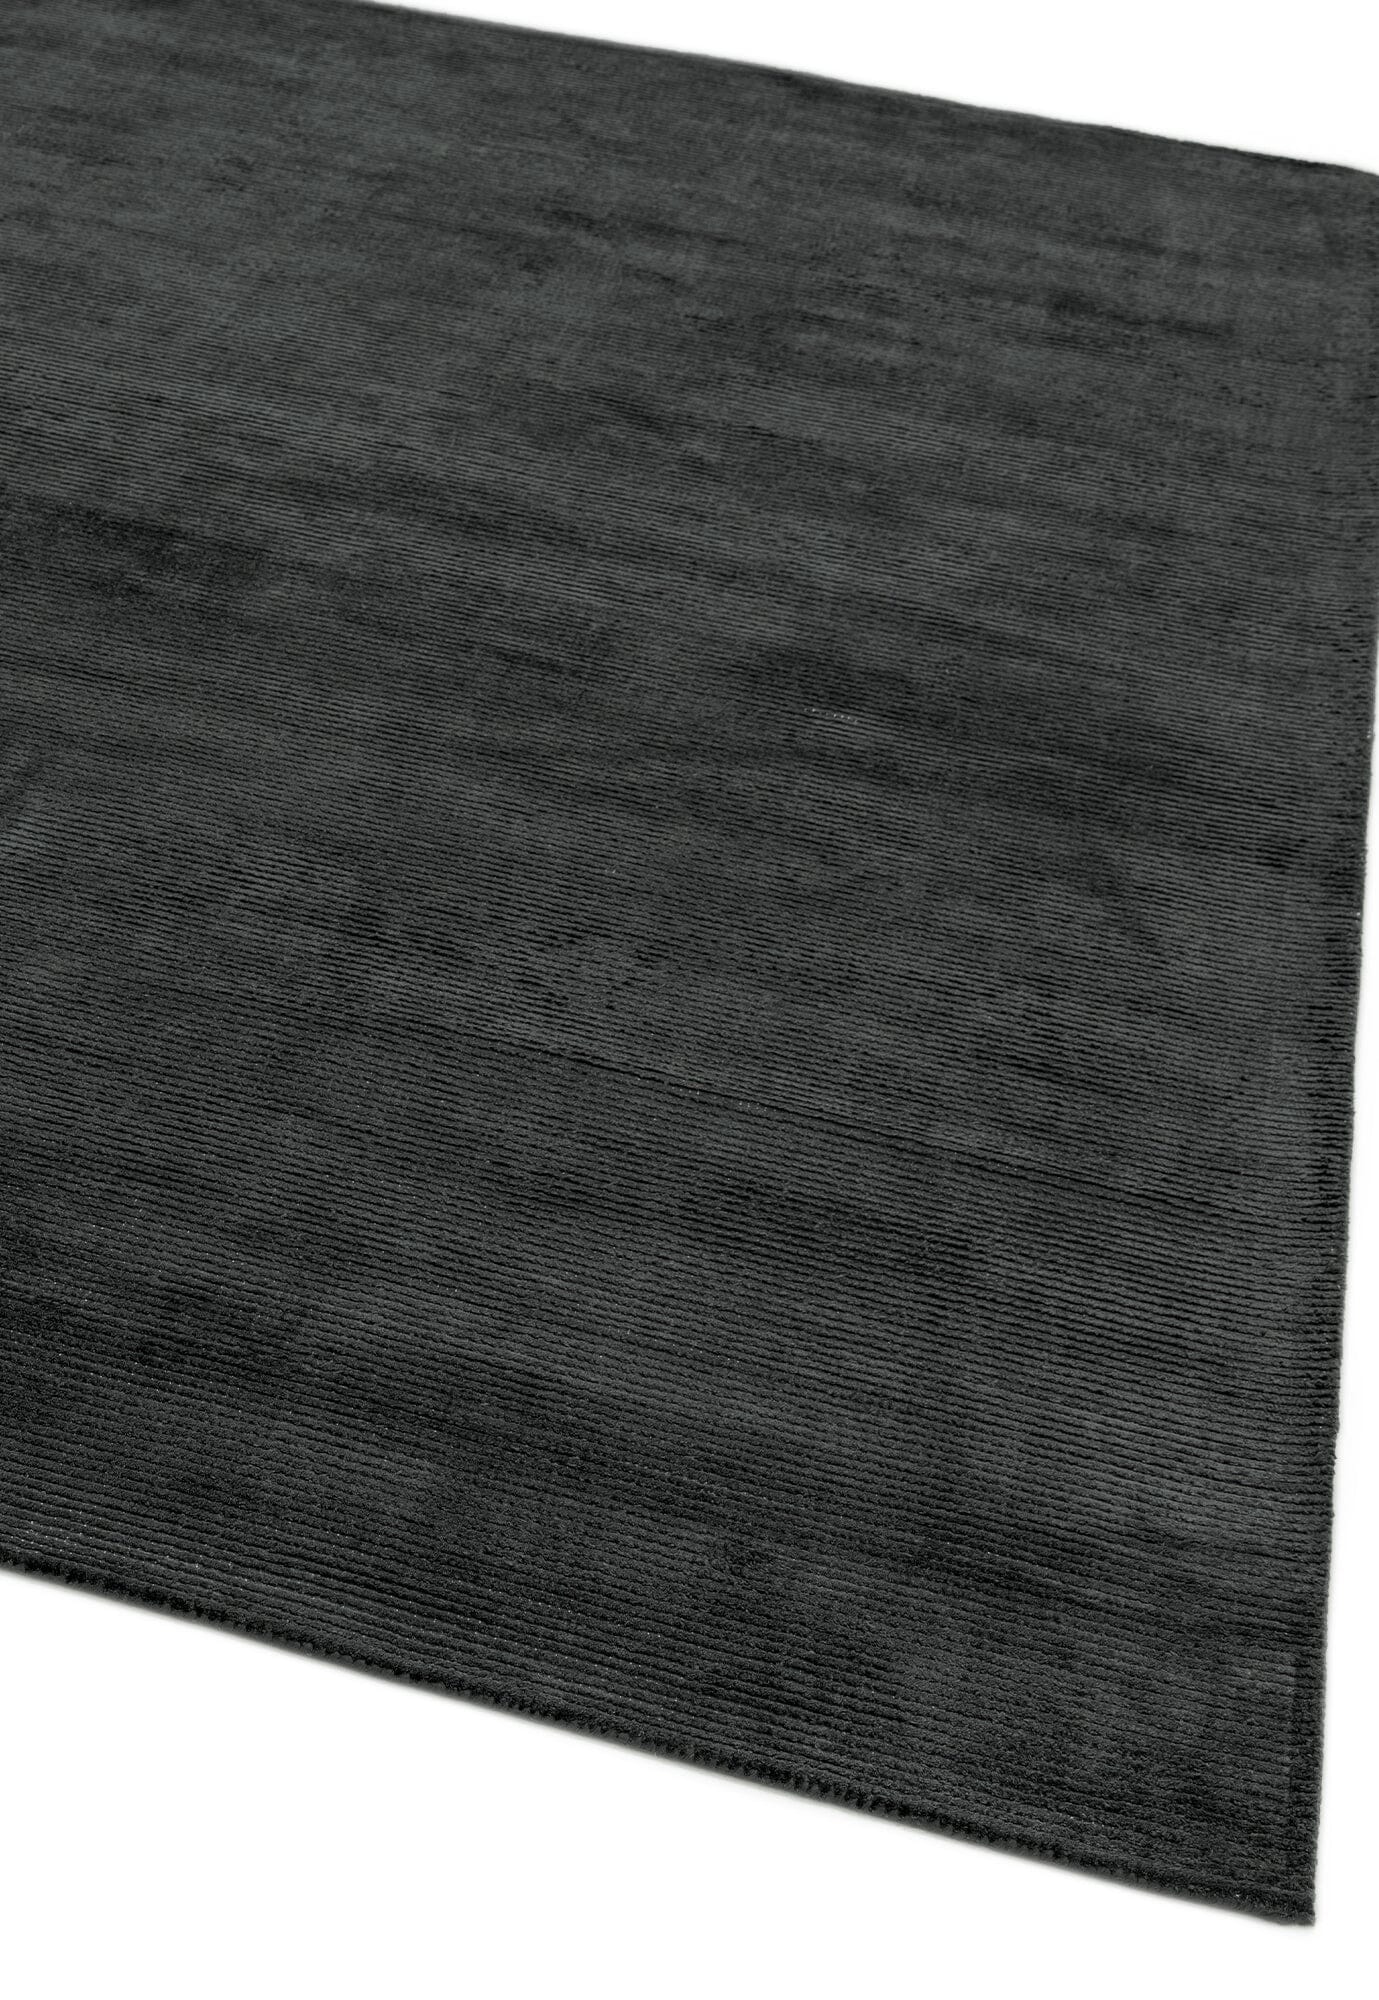  Asiatic Carpets-Asiatic Carpets Reko Hand Woven Rug Charcoal - 160 x 230cm-Grey, Silver 453 